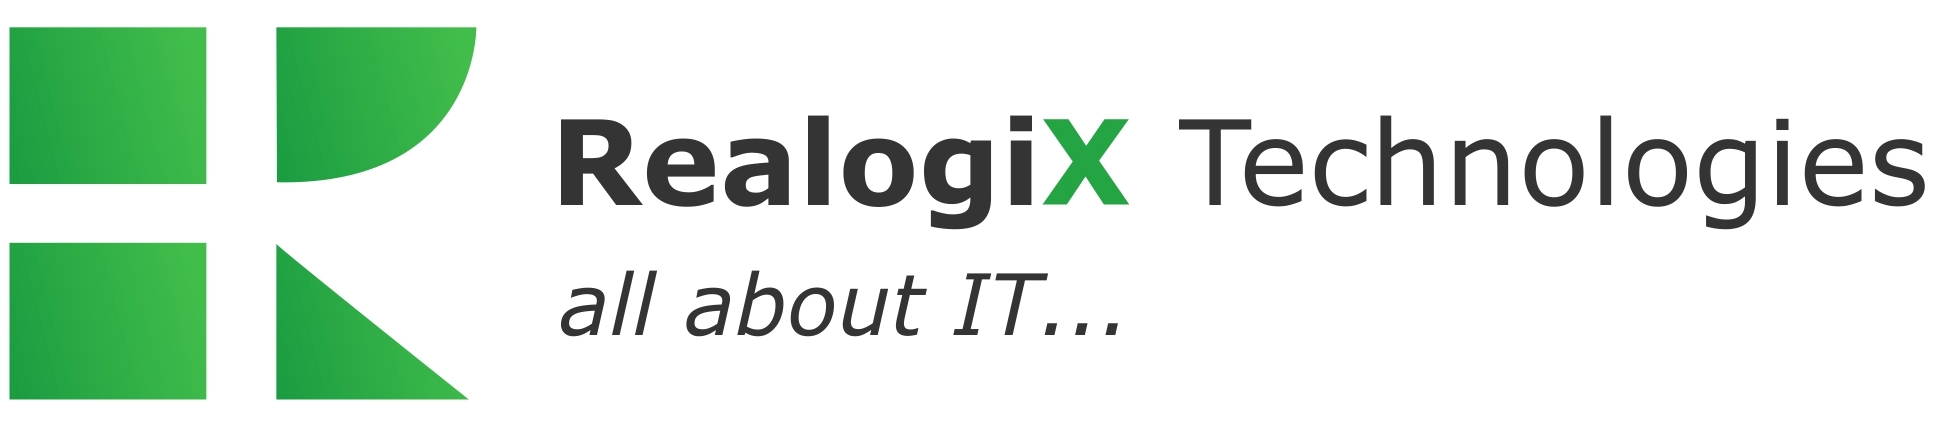 Realogix Technologies